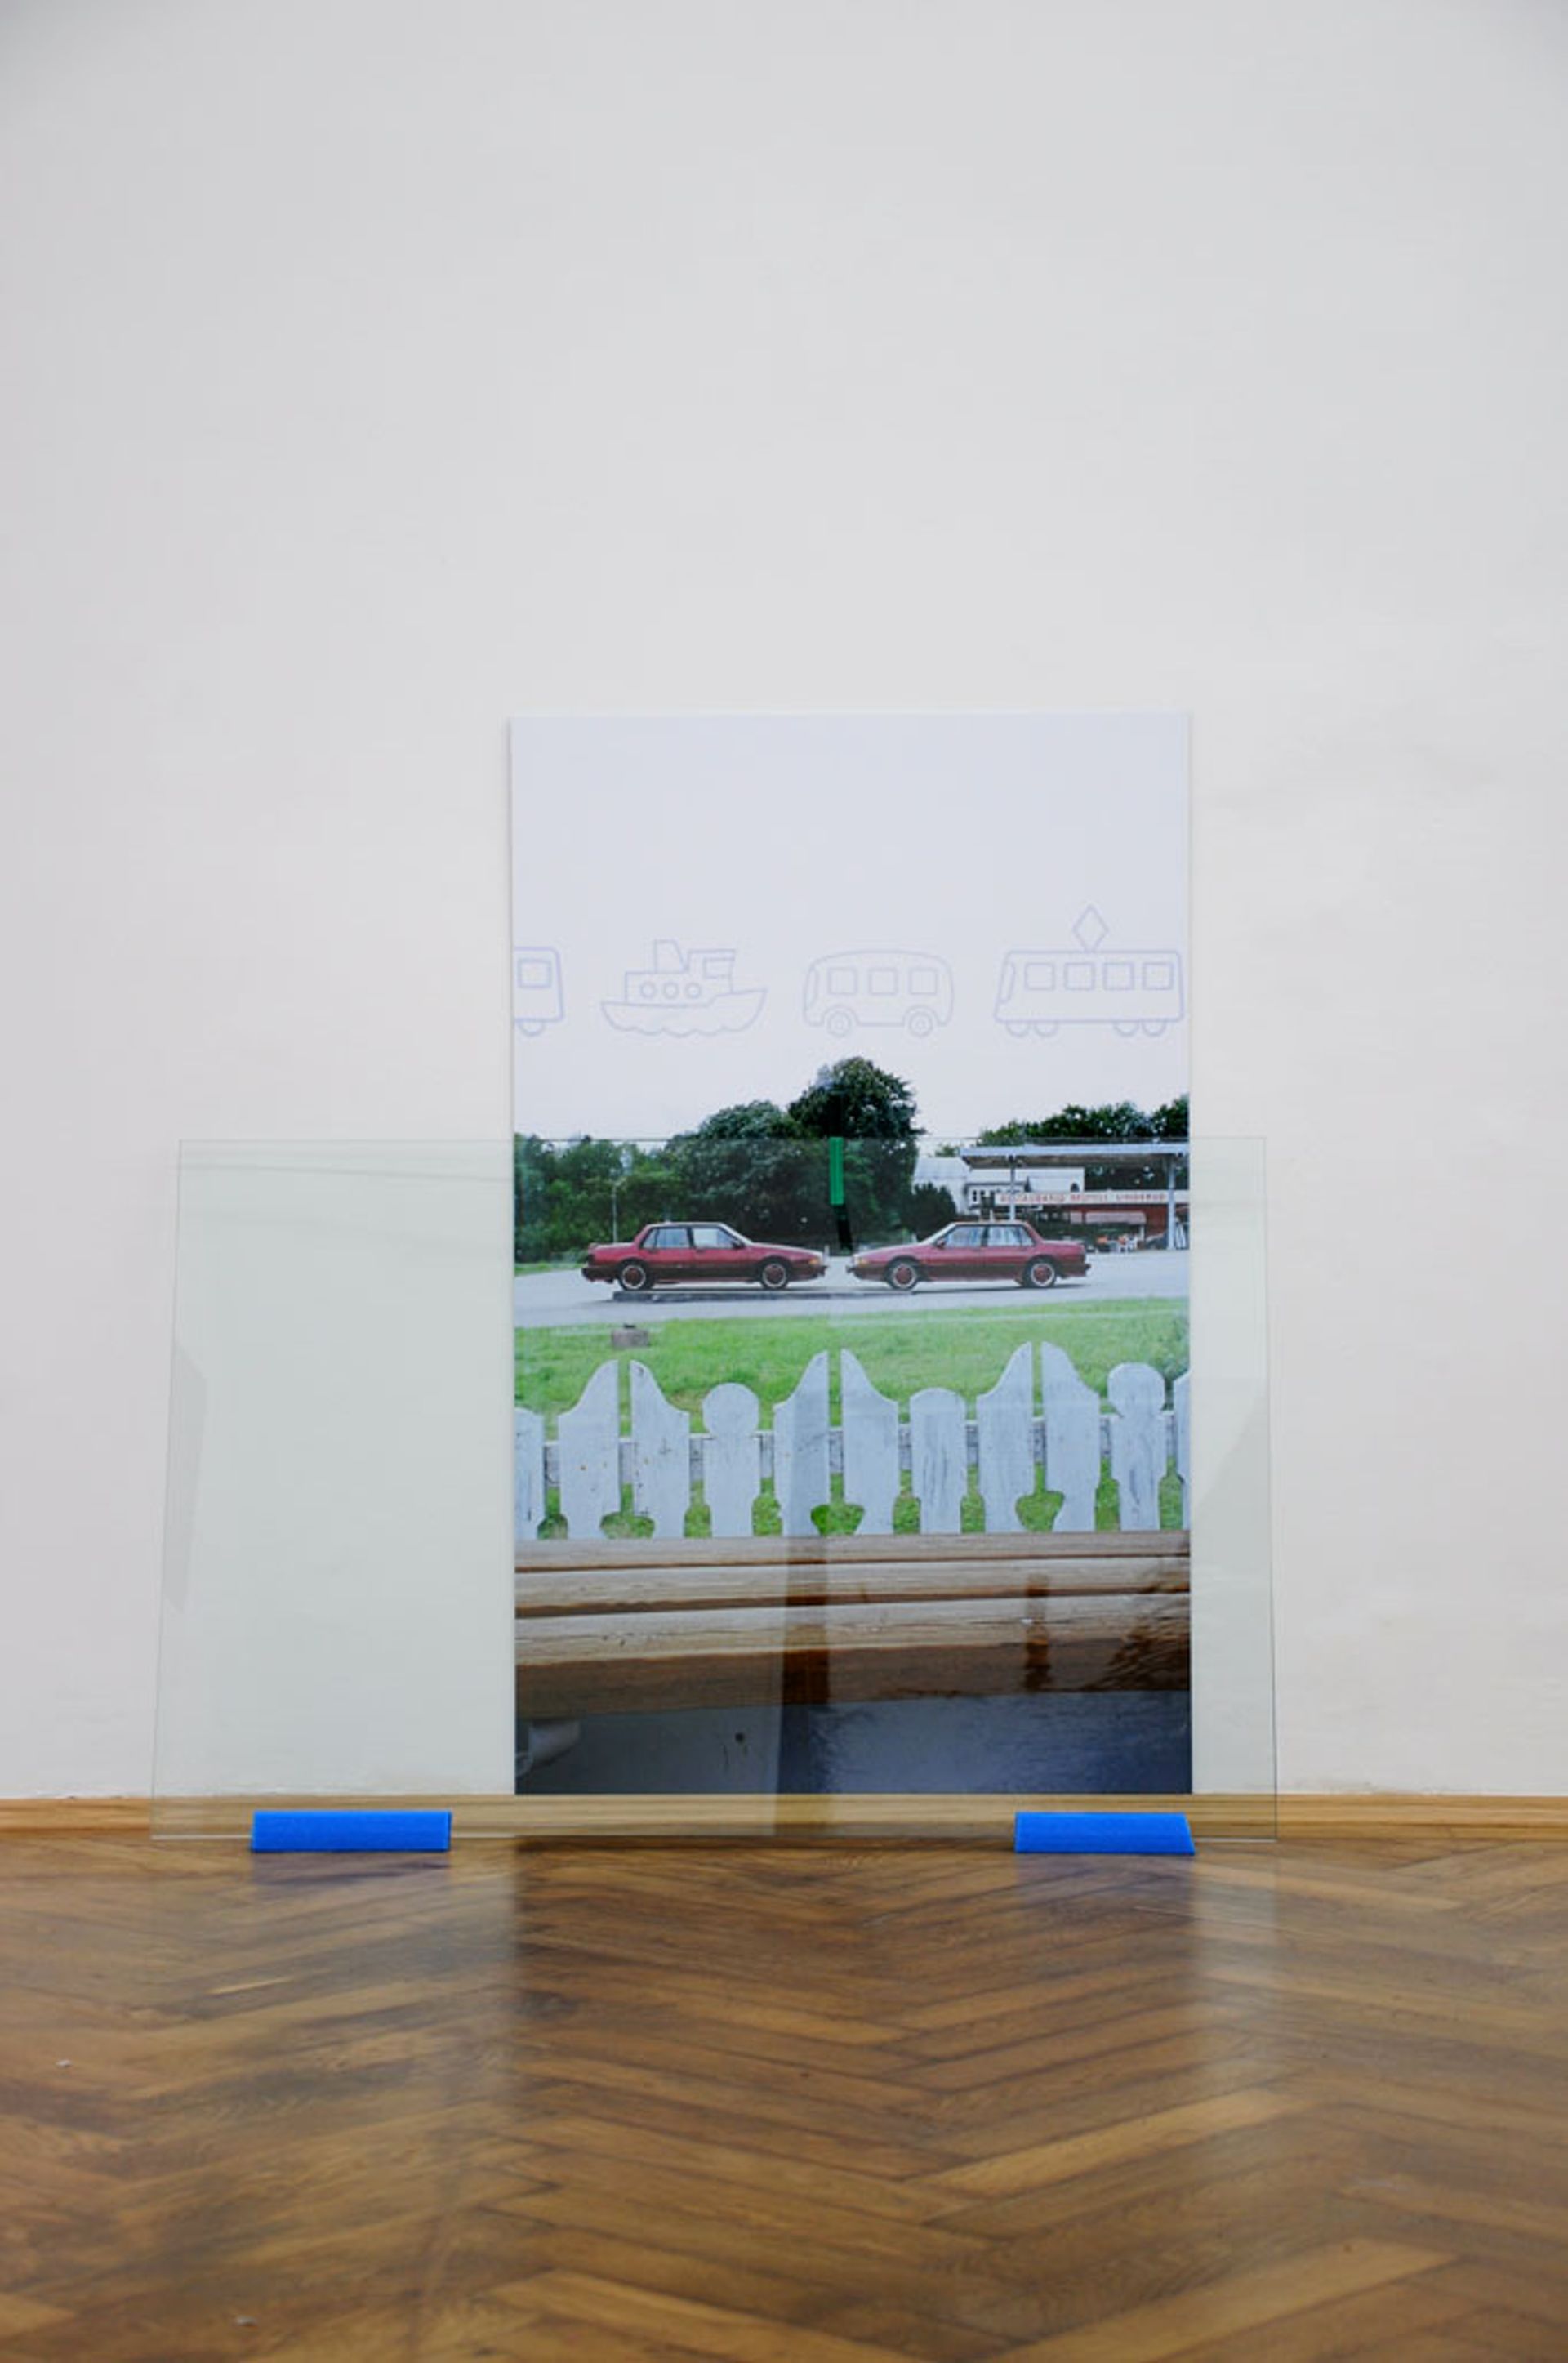 Peter Dobroschke, Zwillinge, 2014
C-print (laminated), glass pane, mirror, edge protector
110 x 110 x 22 cm
Edition: 2 + 2 AP
